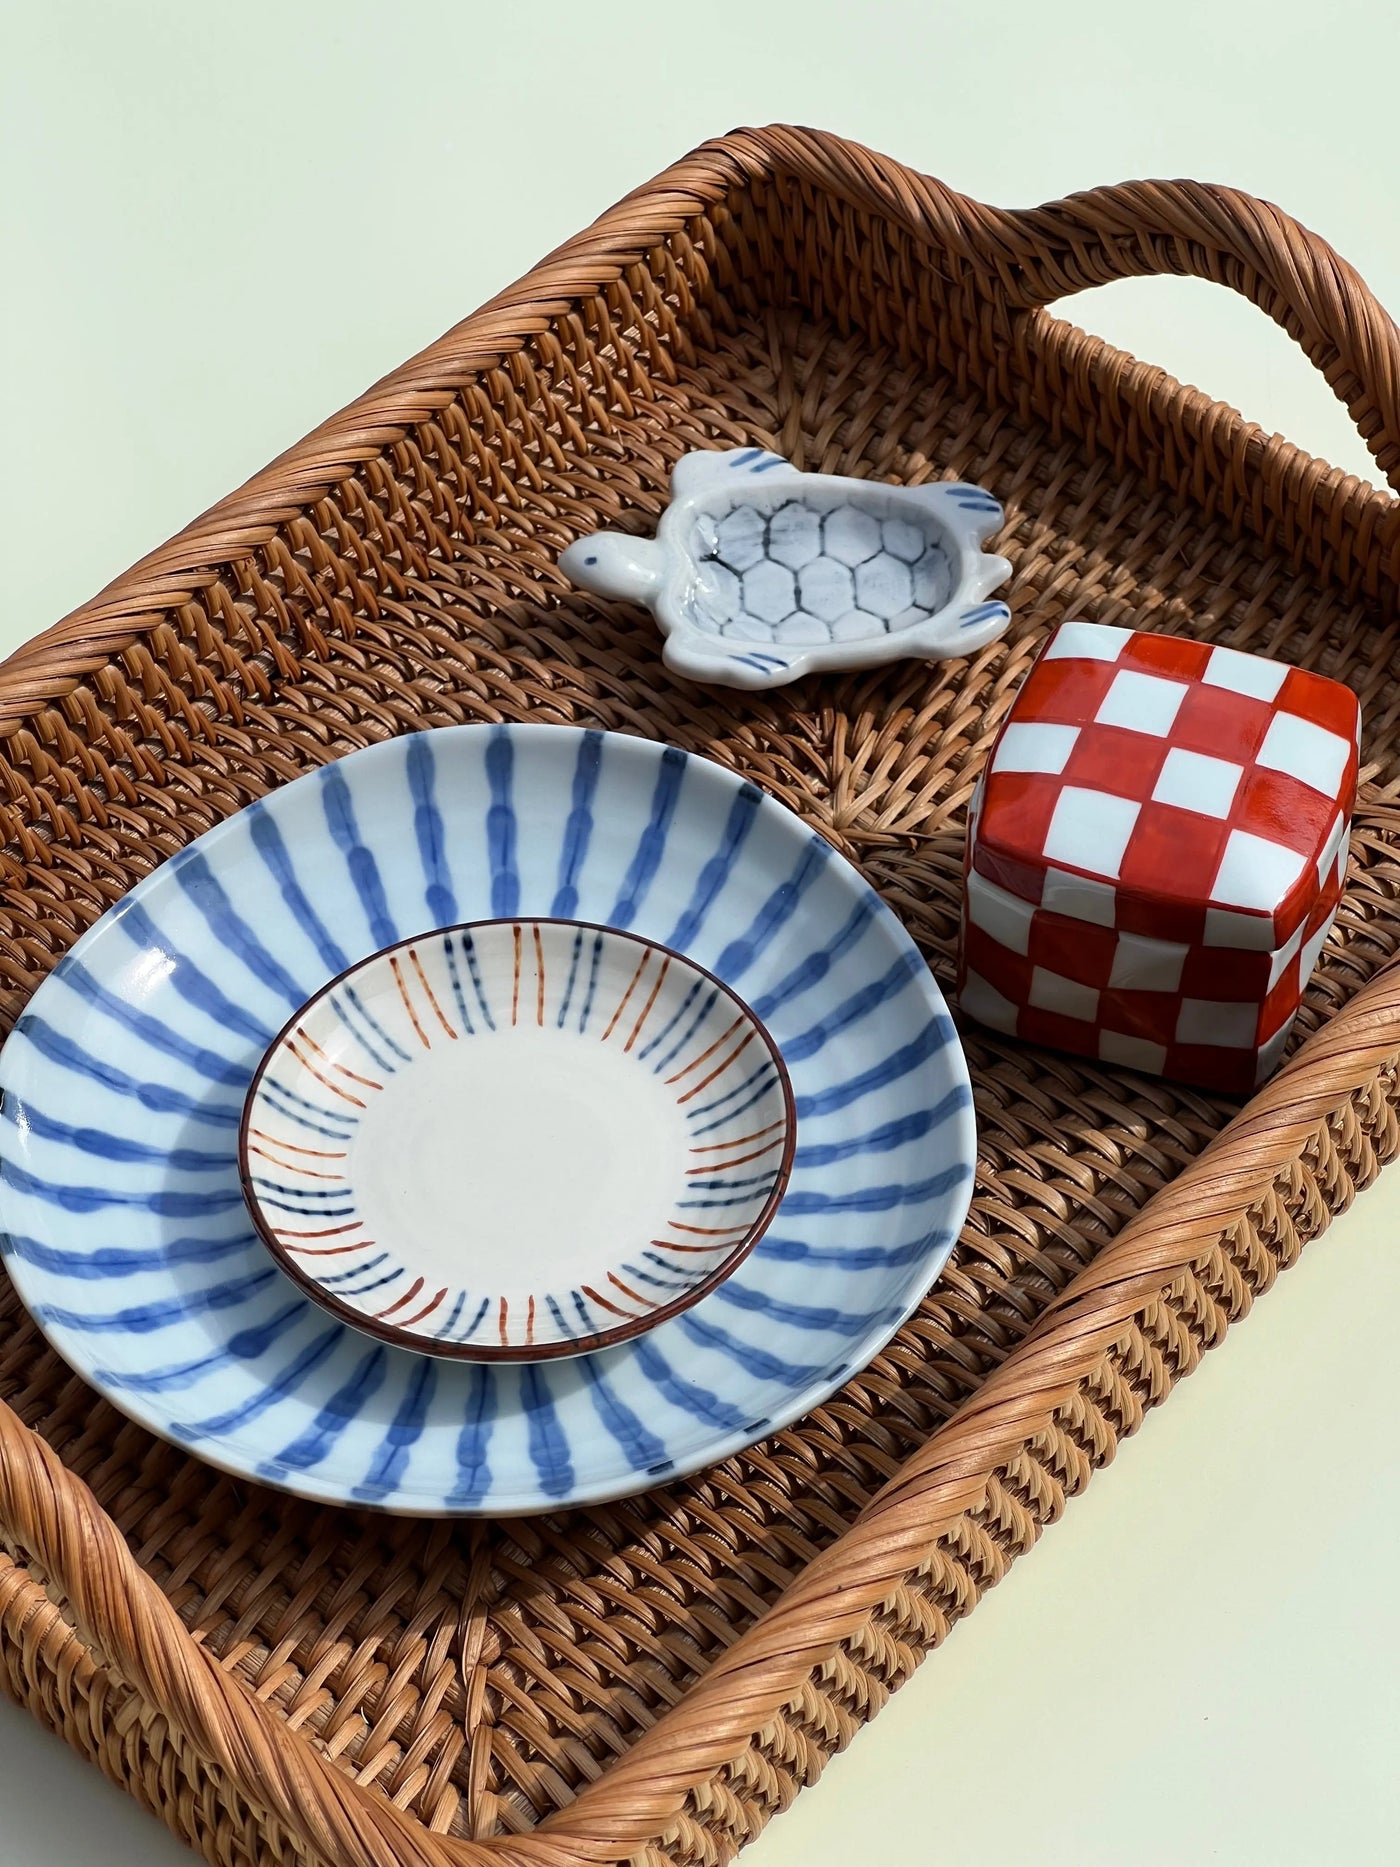 Japansk tallerken i hvid keramik med blå striber | 16 cm Studio Hafnia